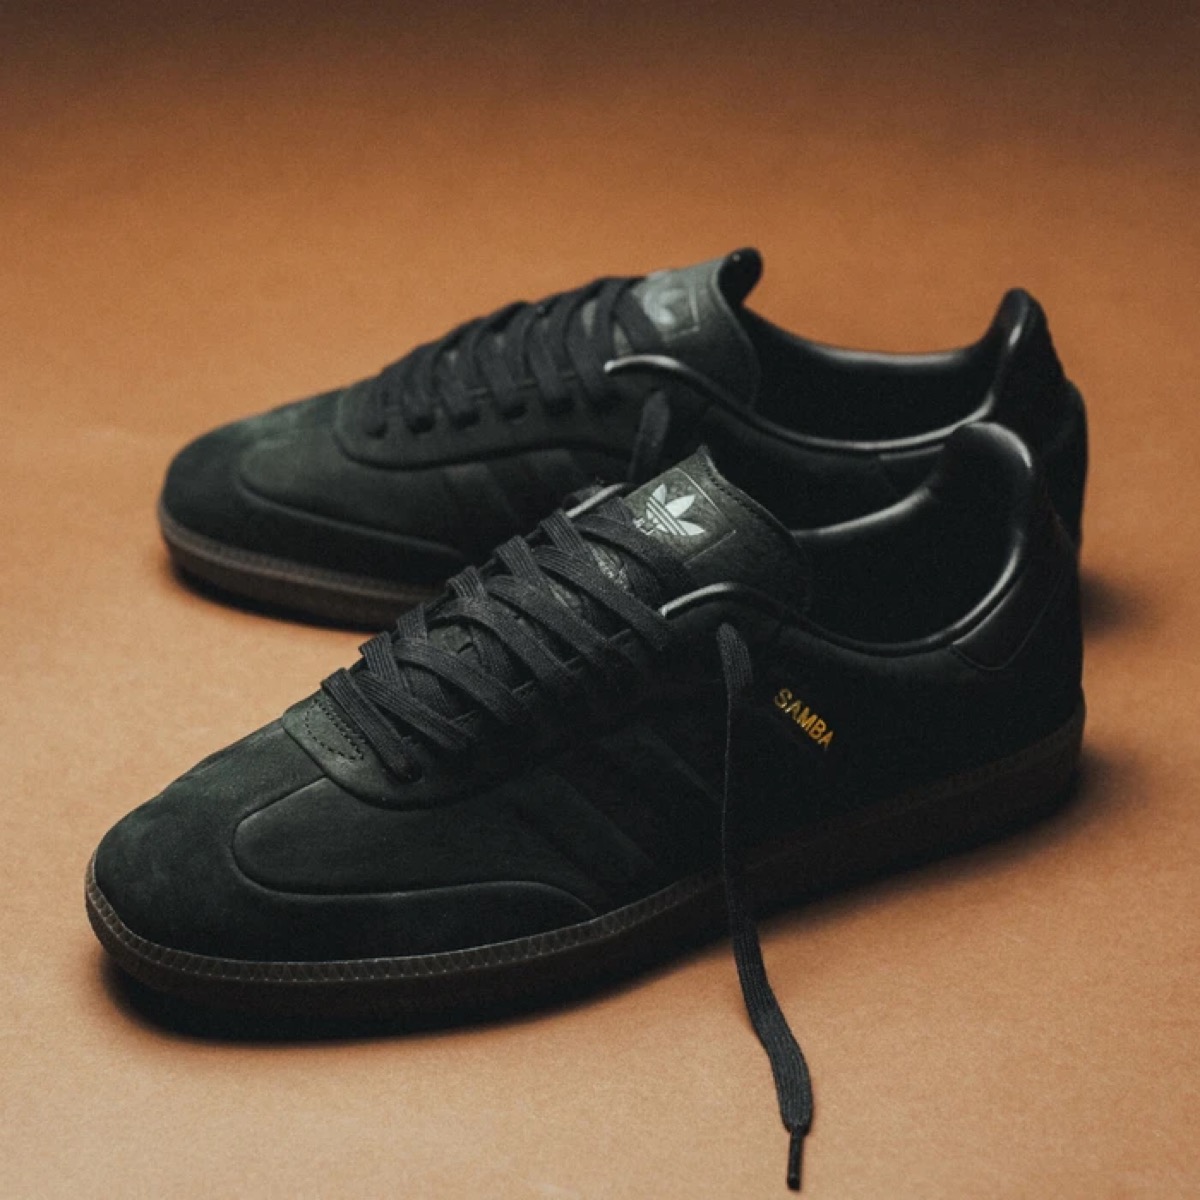 Adidas Originals Samba black